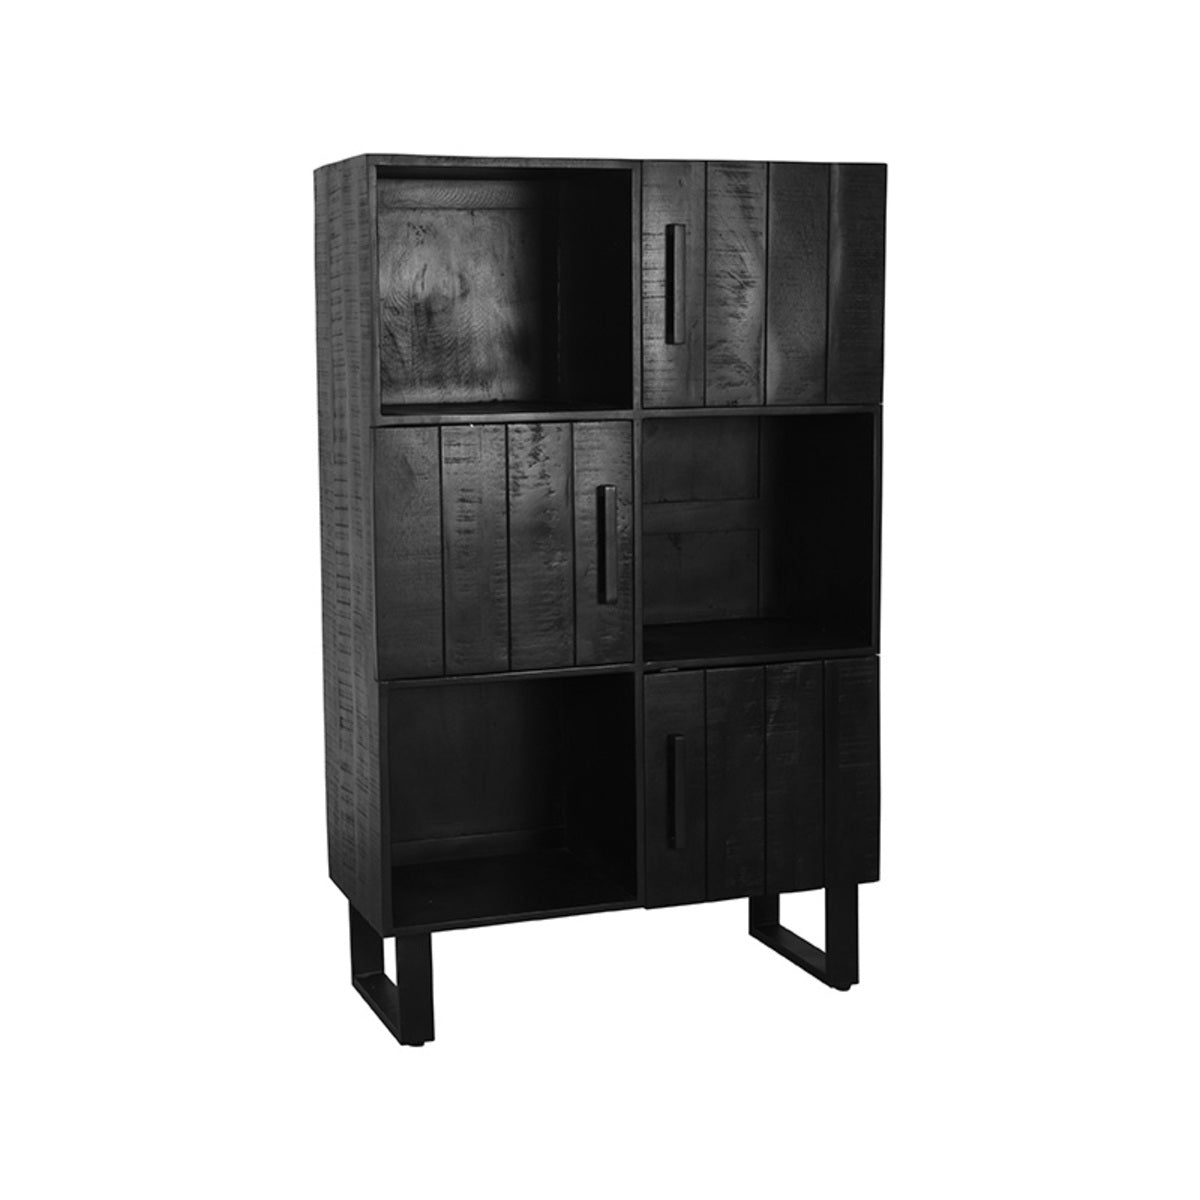 LABEL51 Santos storage cupboard - Black - Mango wood